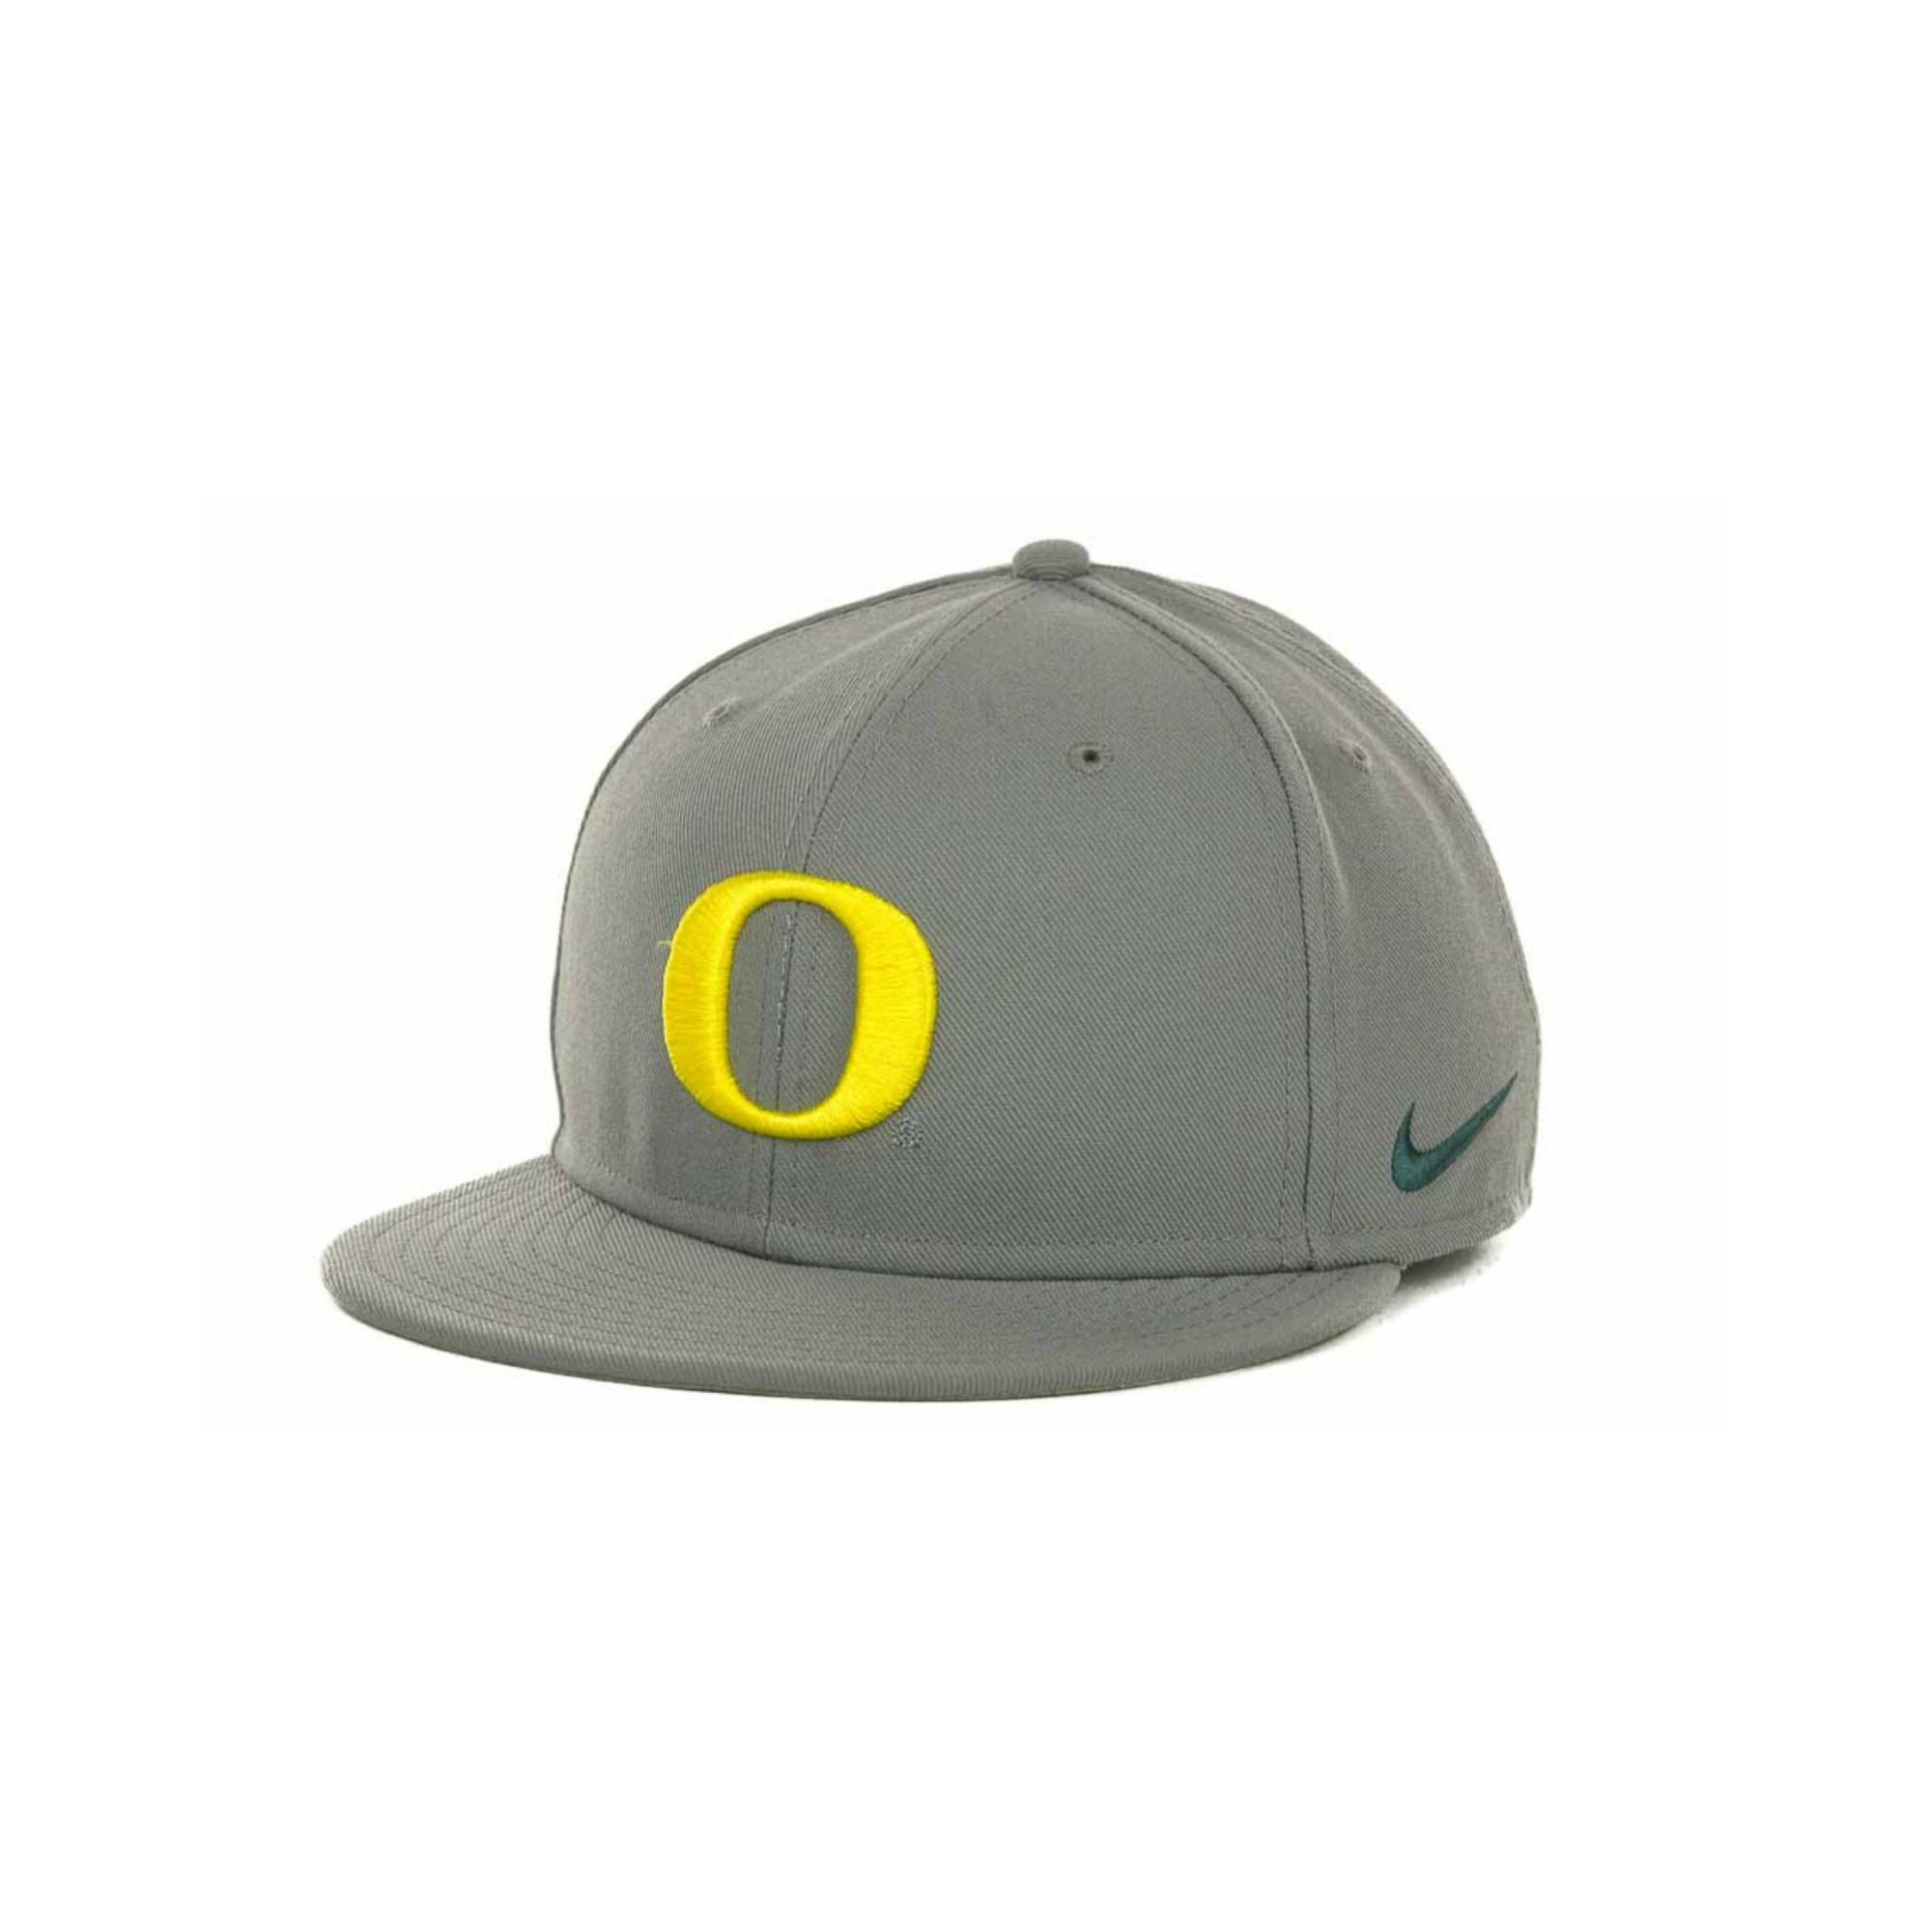 Vintage Oregon Ducks Nike hat — MY CAMPUS CLOSET